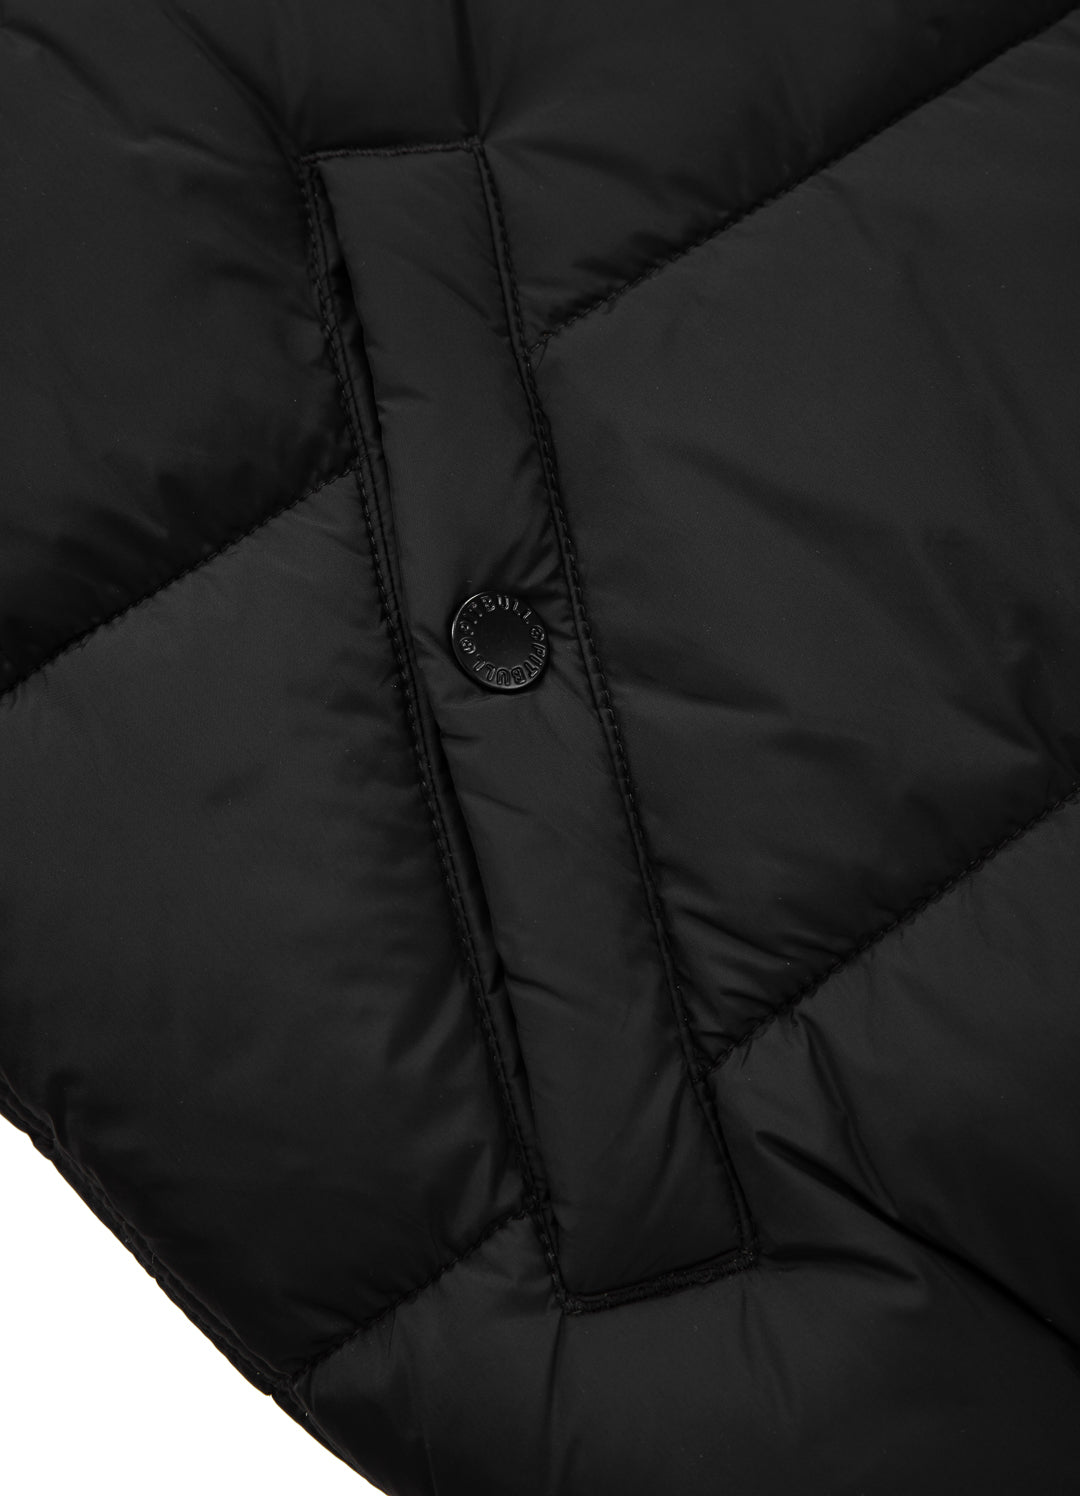 Topside 2 Black Padded Jacket.